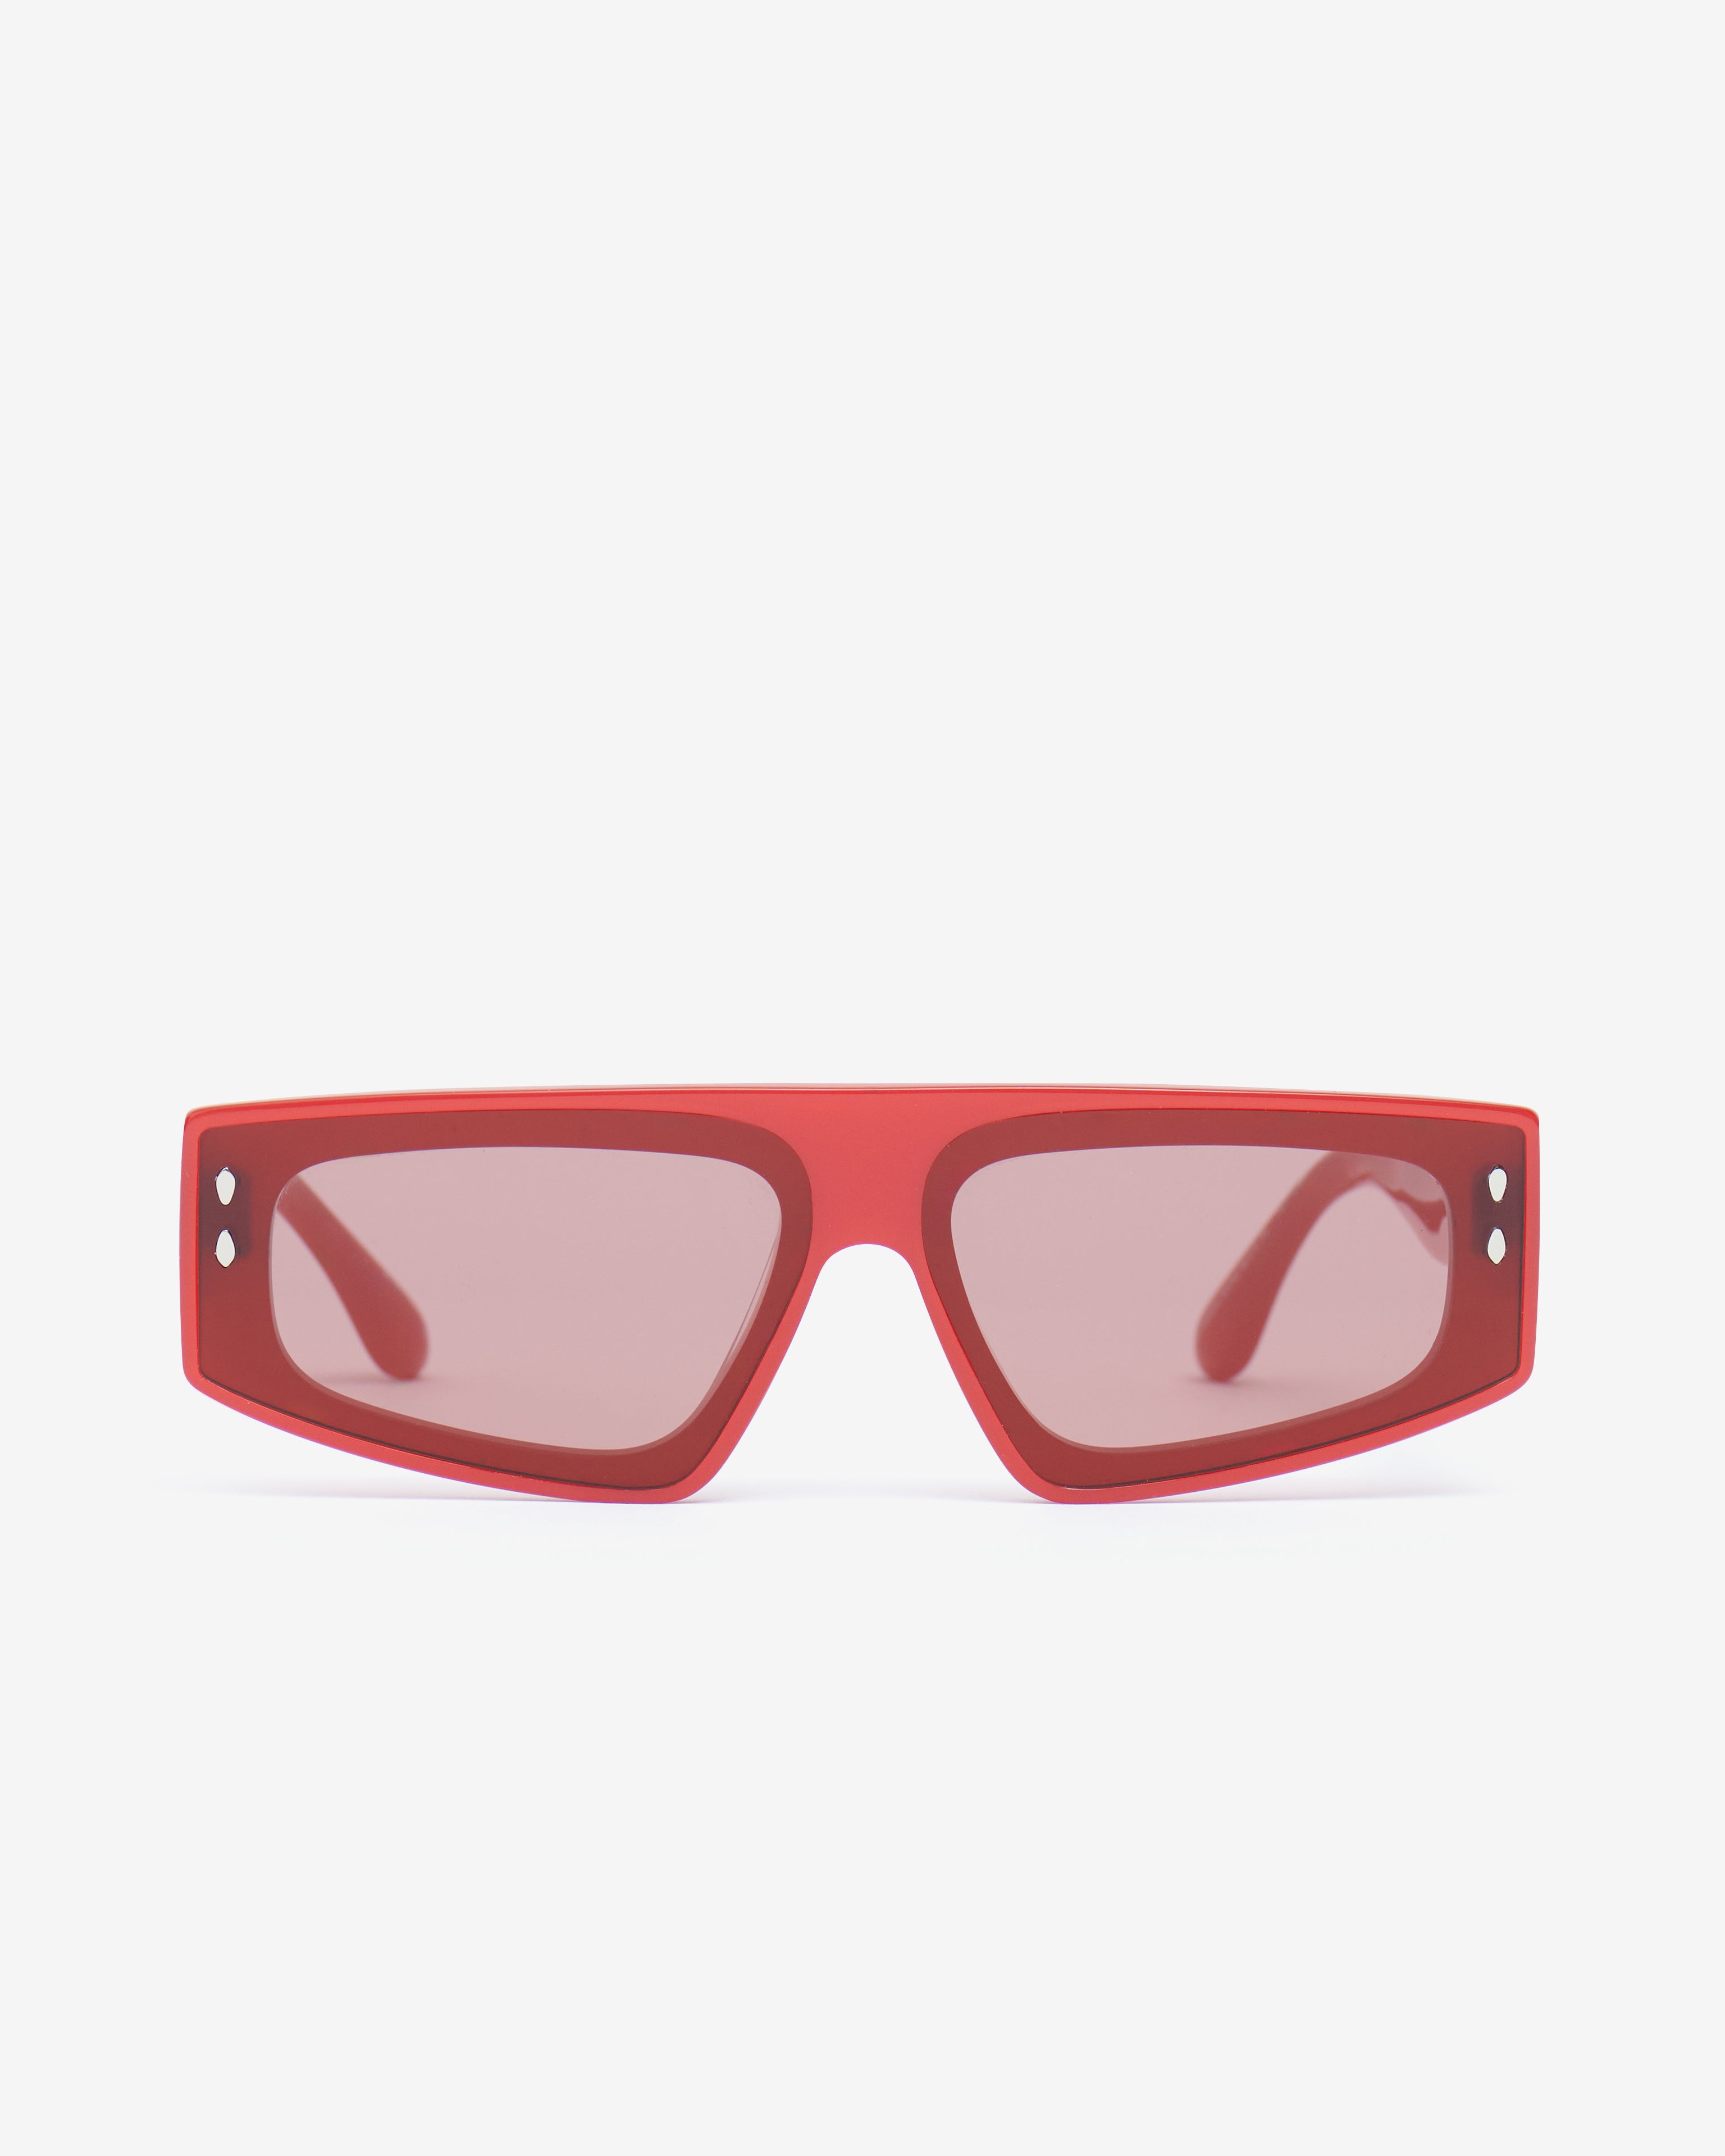 Zoomy occhiali da sole Woman Pearled red-burgundy 1